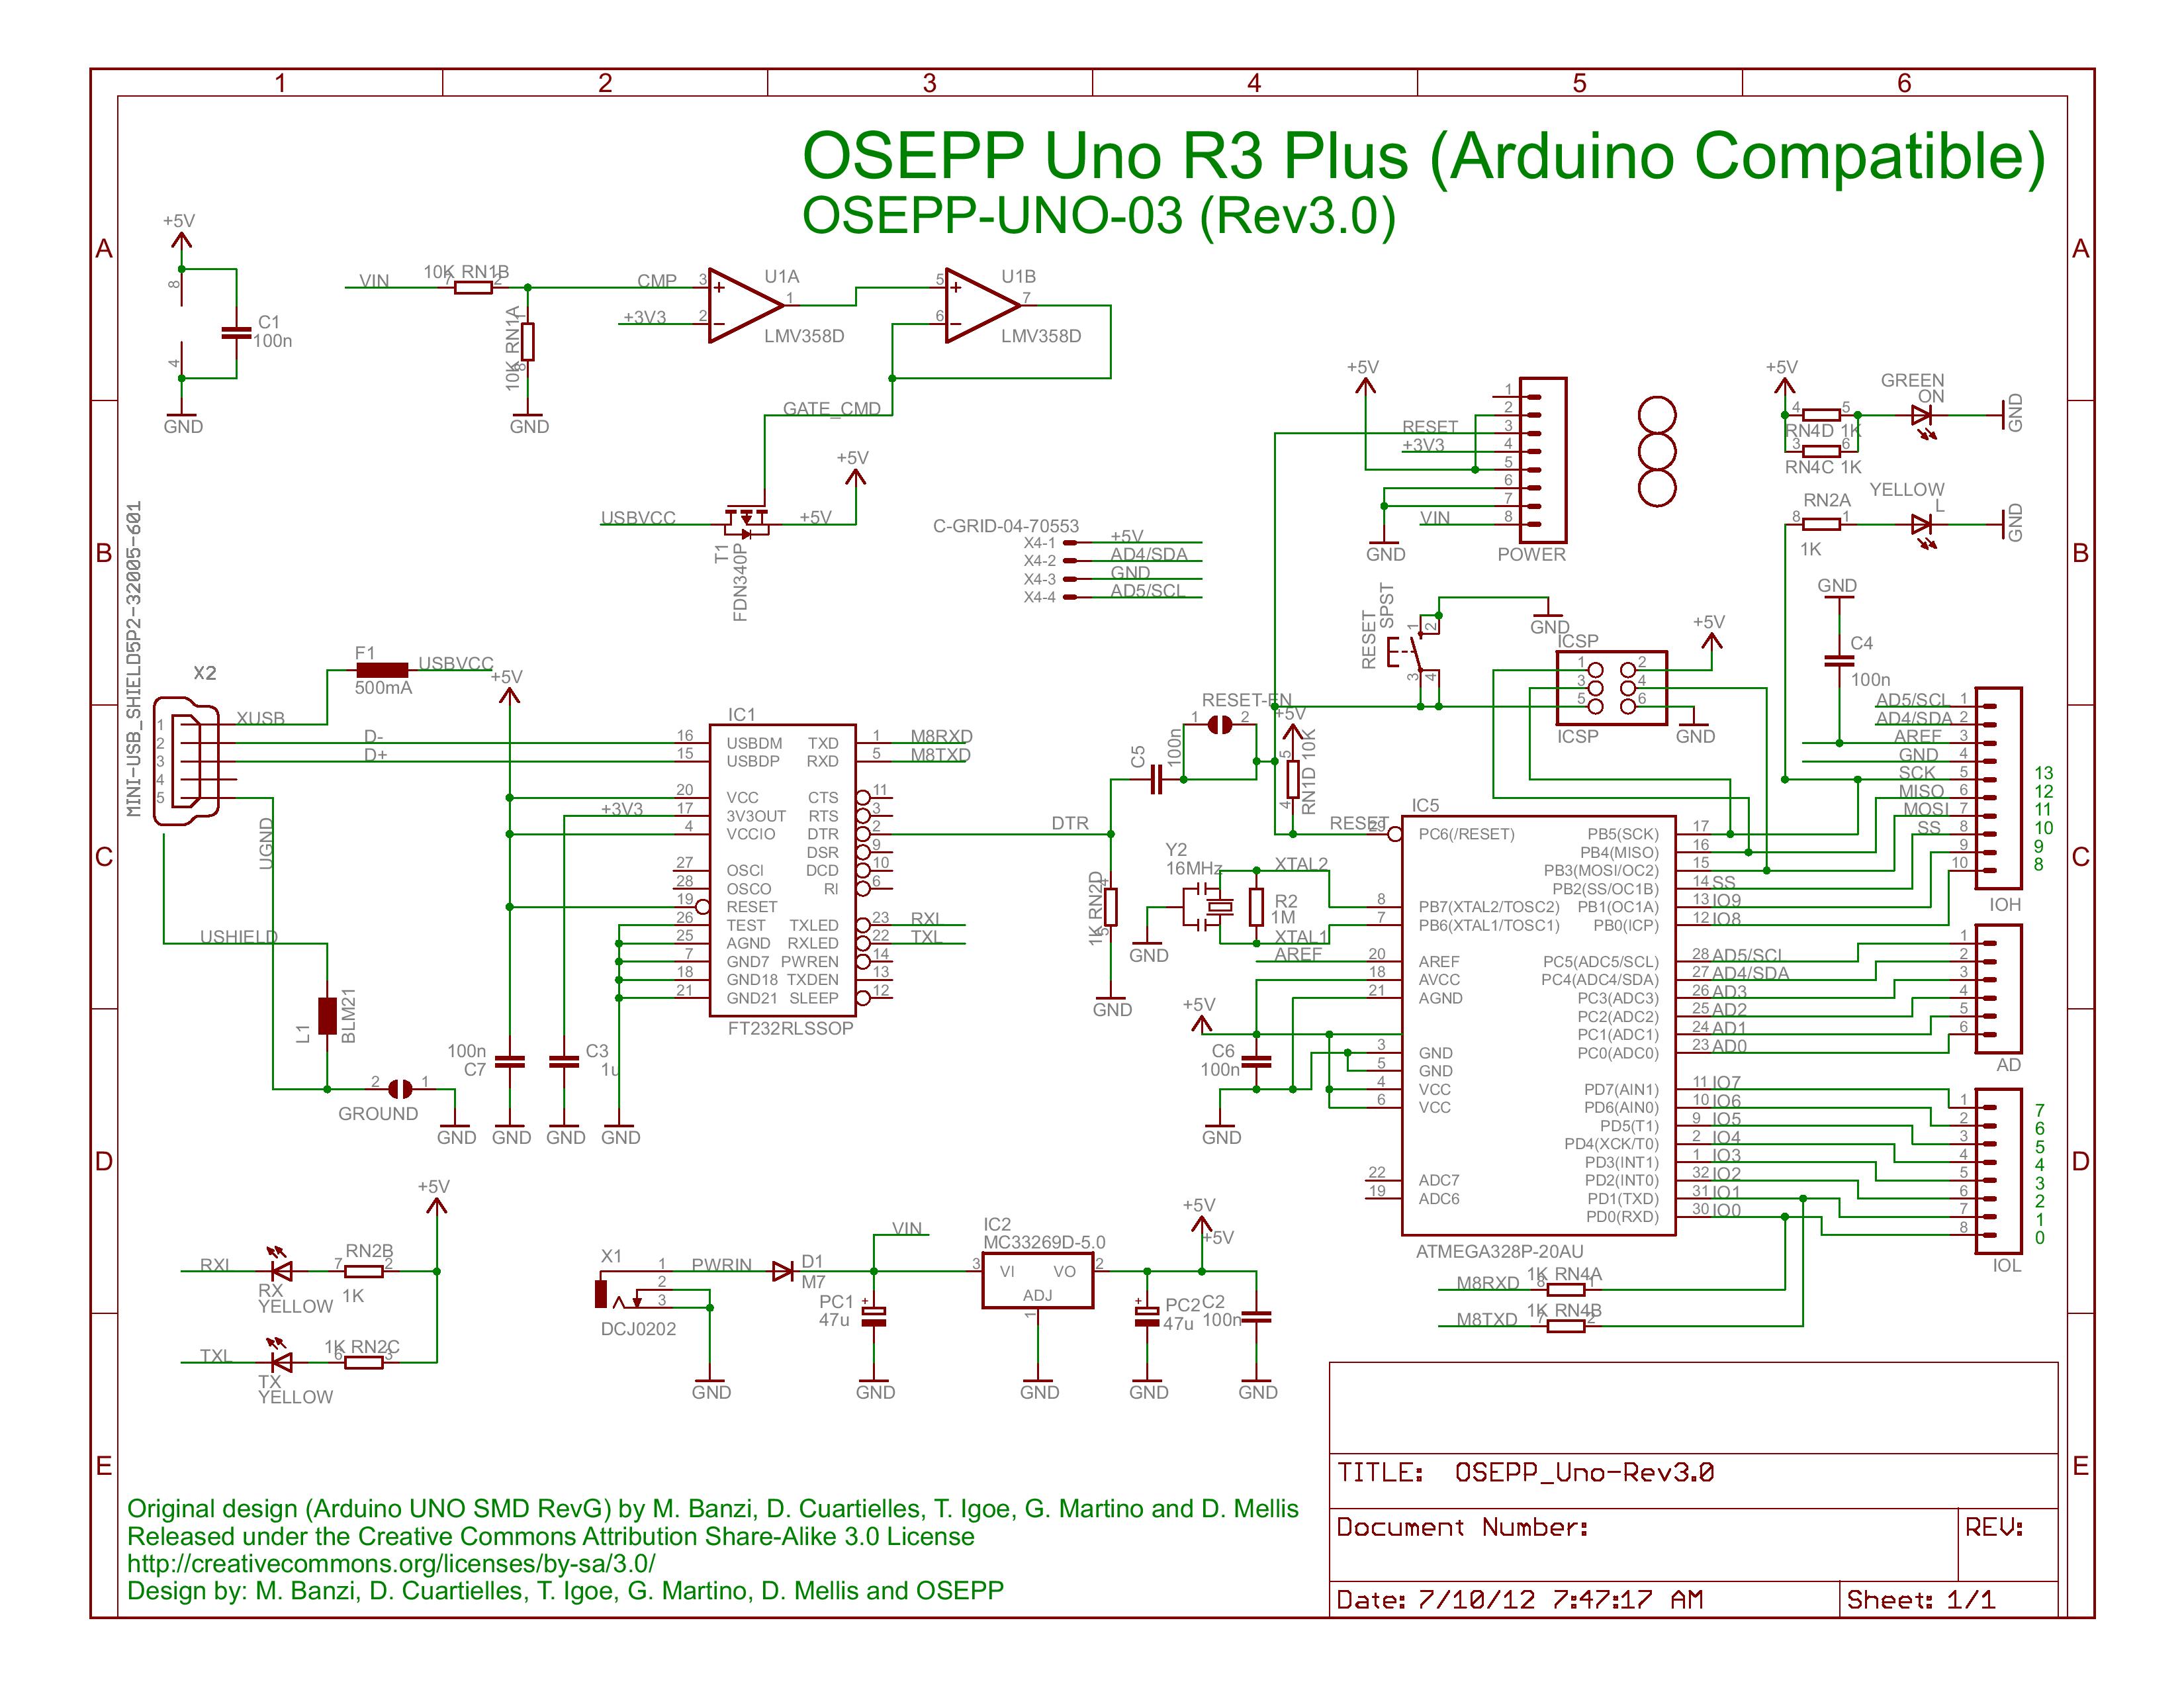 OSEPP Uno R3 Plus Schematic - Source: OSEPP